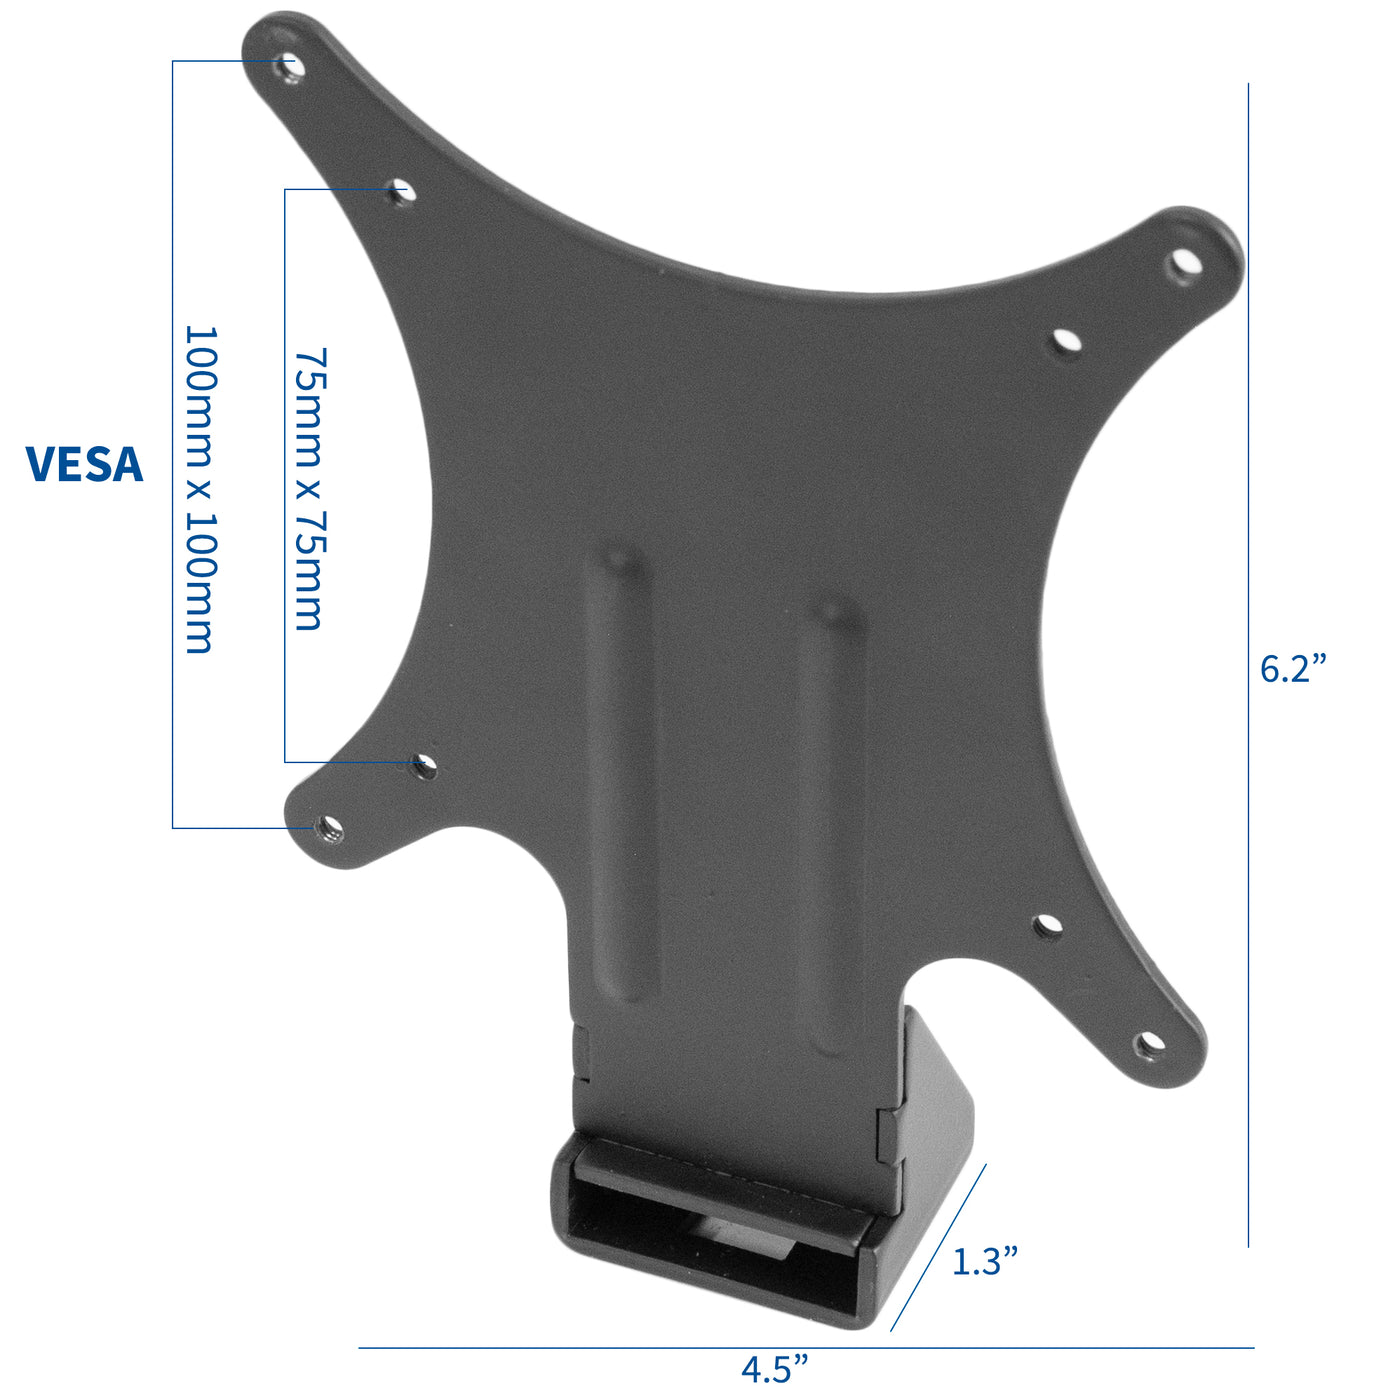 VESA adapter bracket for compatible HP monitors.